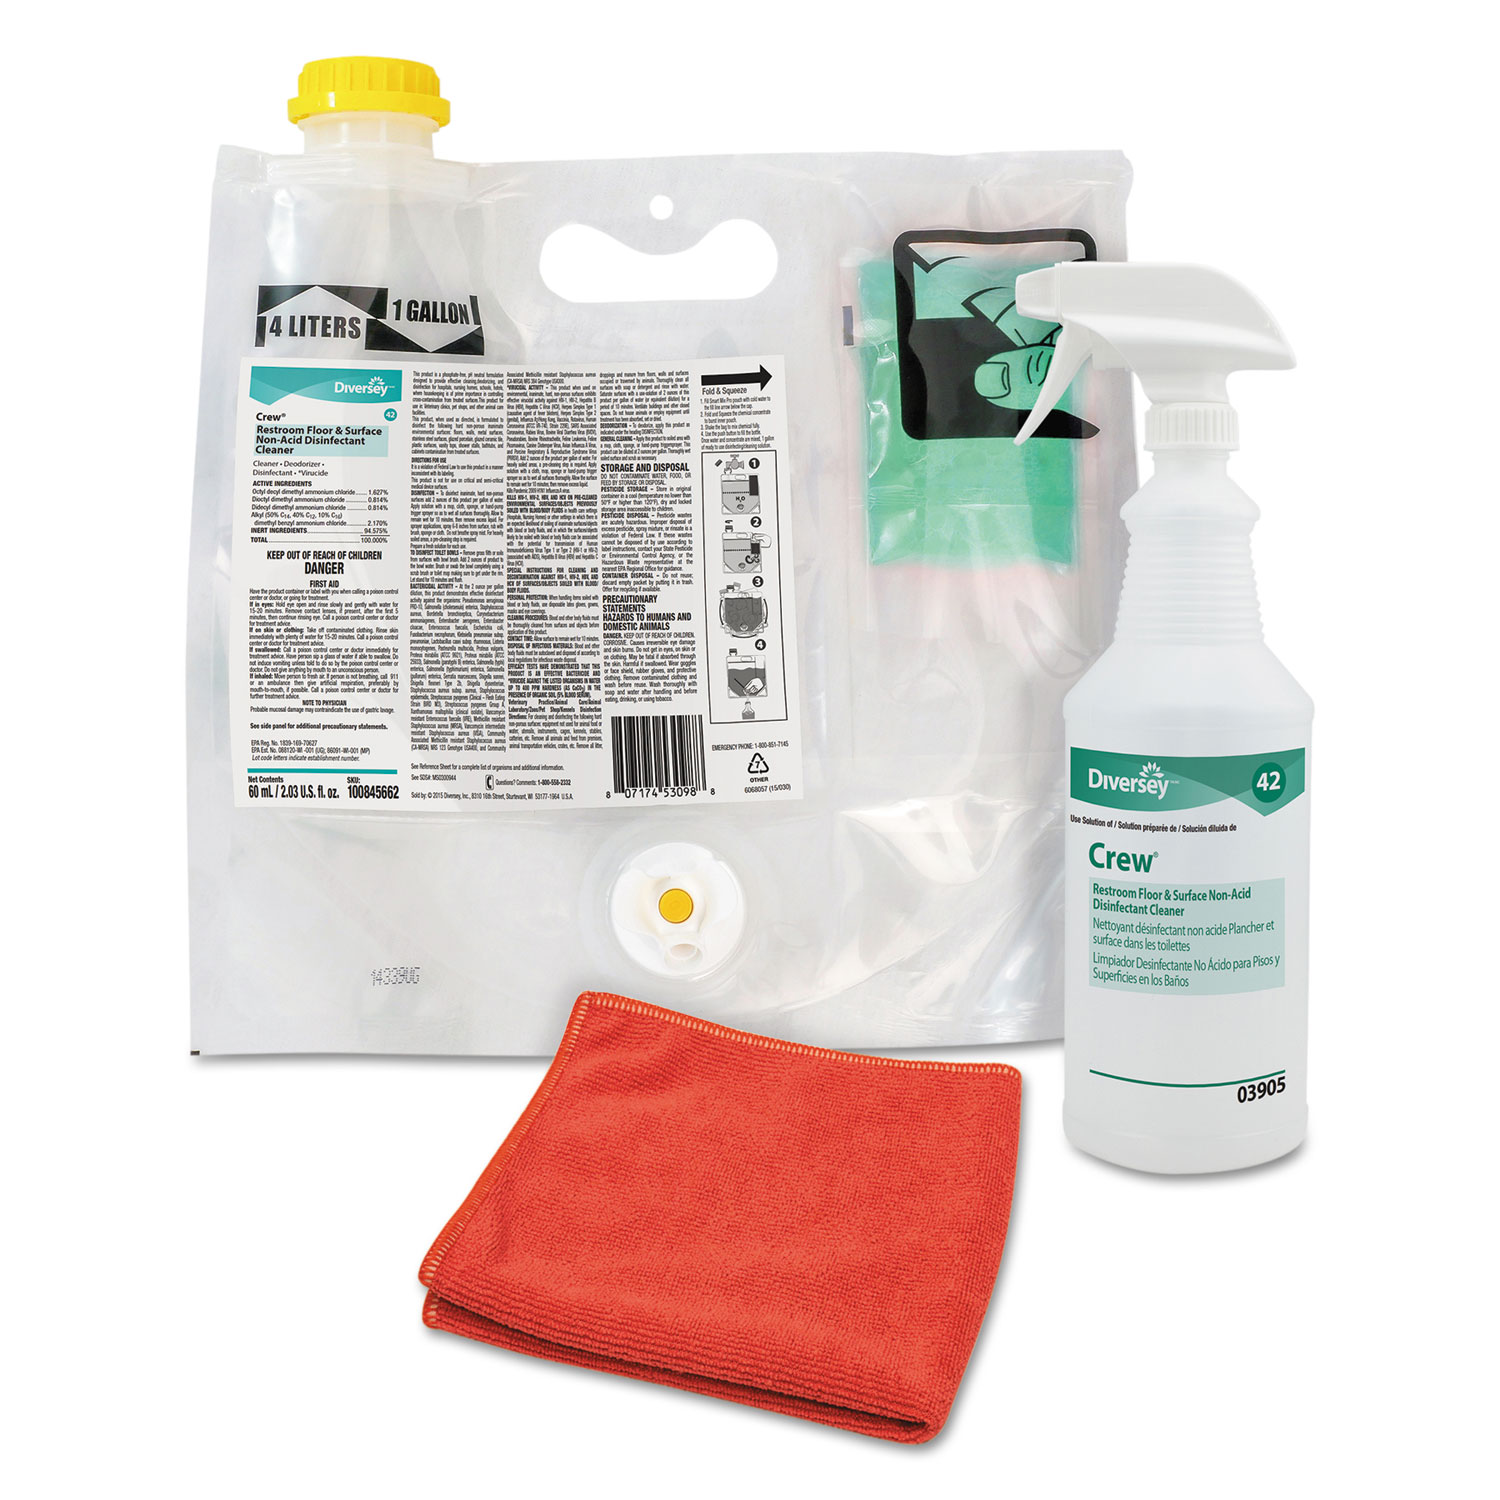 Crew Restroom Non-Acid Disinfectant Cleaner, Fresh, 0.12 L Smart Mix Pack